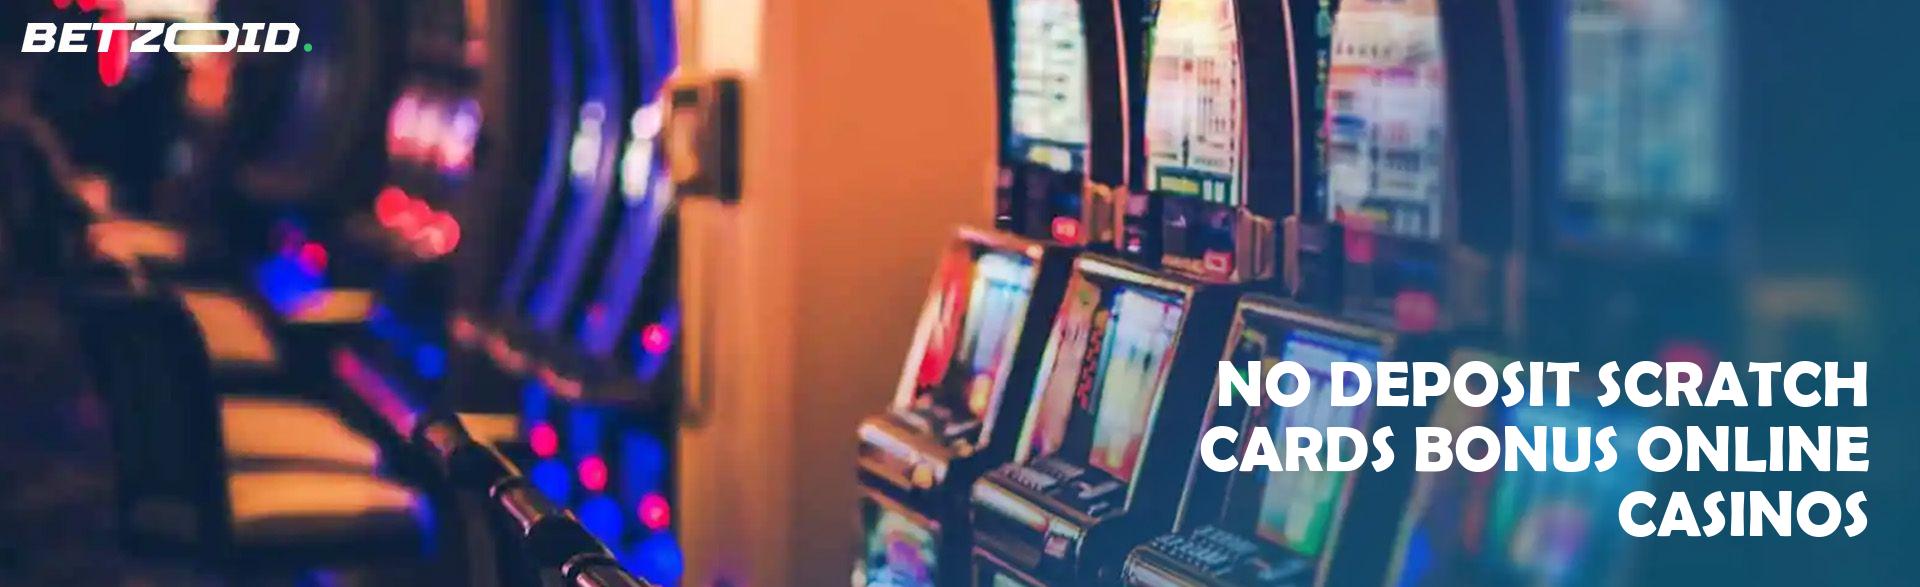 No Deposit Scratch Cards Bonus Online Casinos.